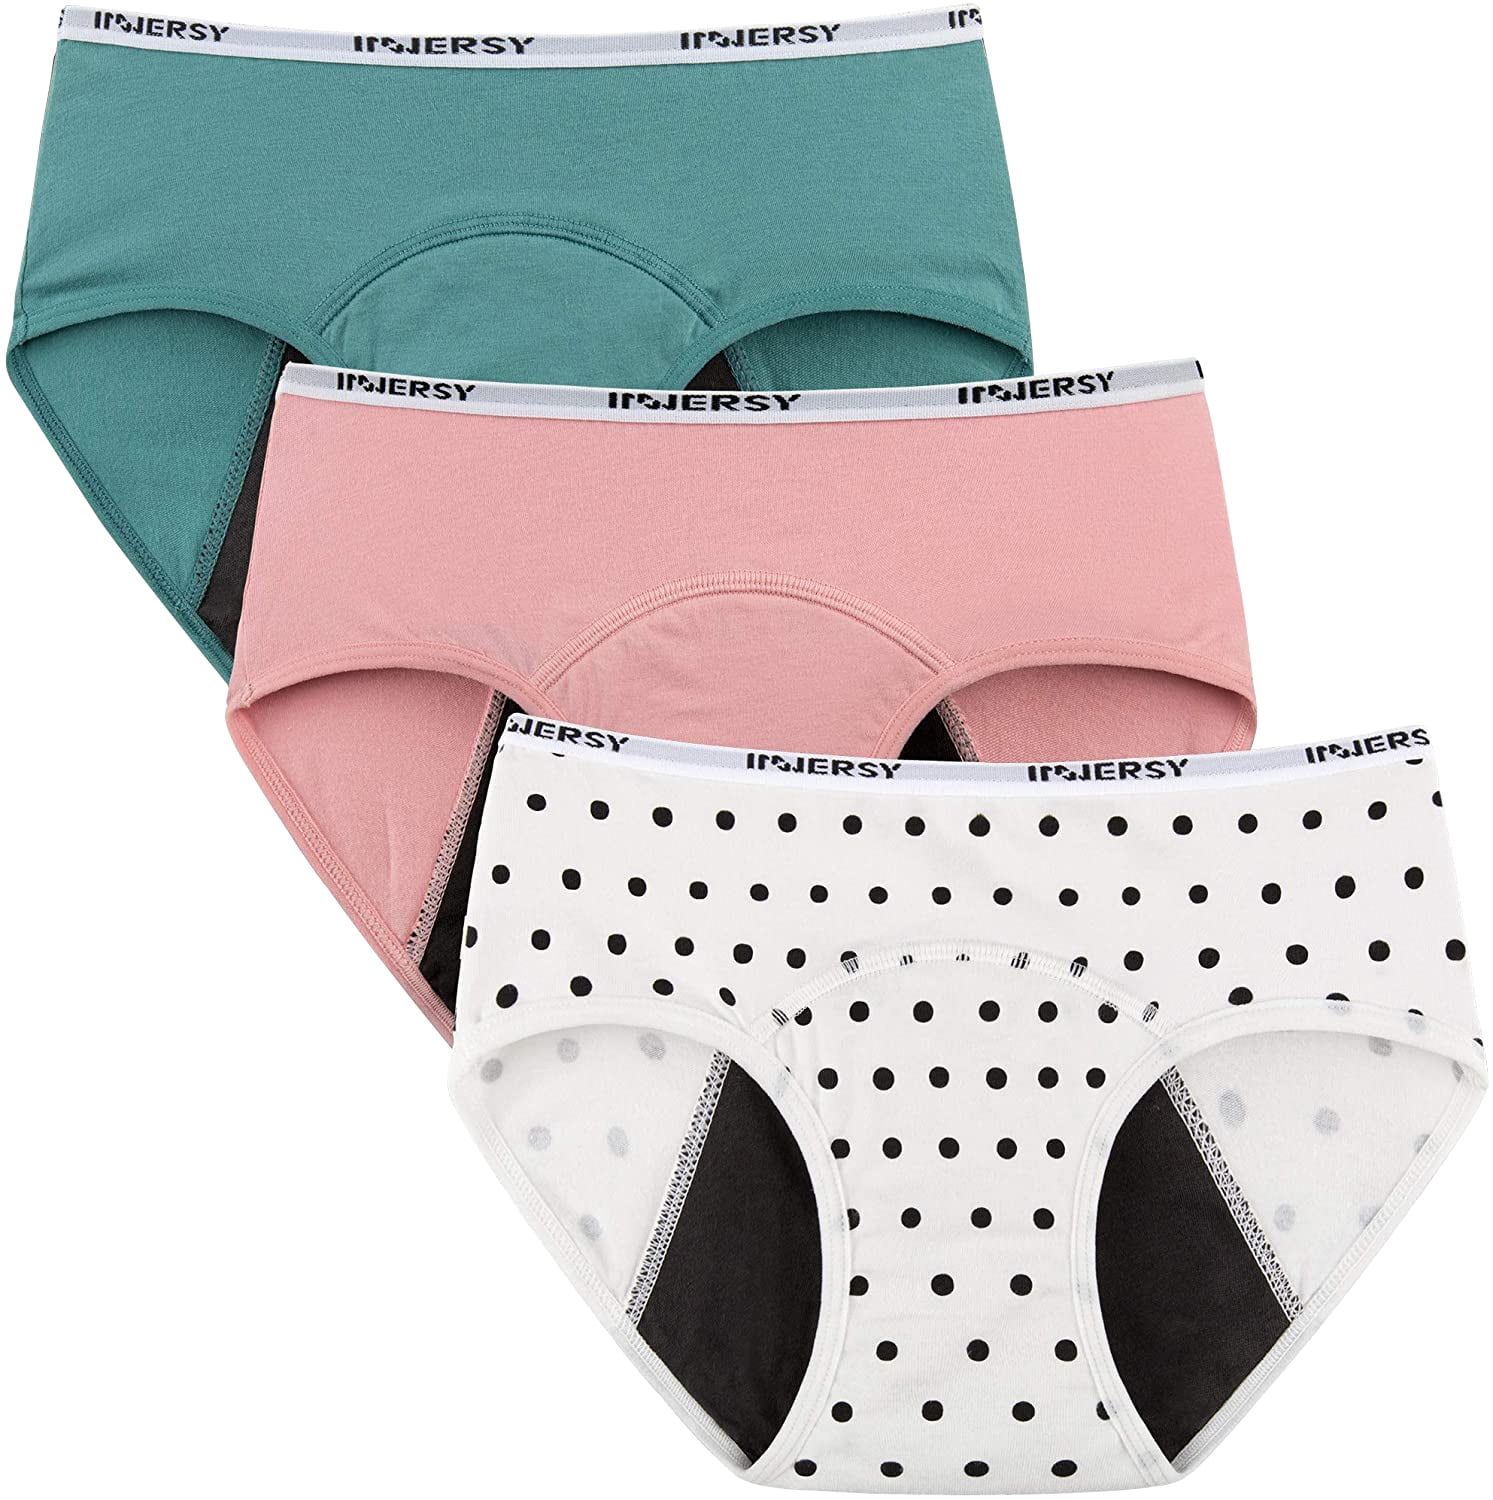 INNERSY Period Underwear for Teens Cotton Leekproof Menstrual Panties  3-Pack (M(10-12 yrs), Refreshing Blue Pink Polka Dots)